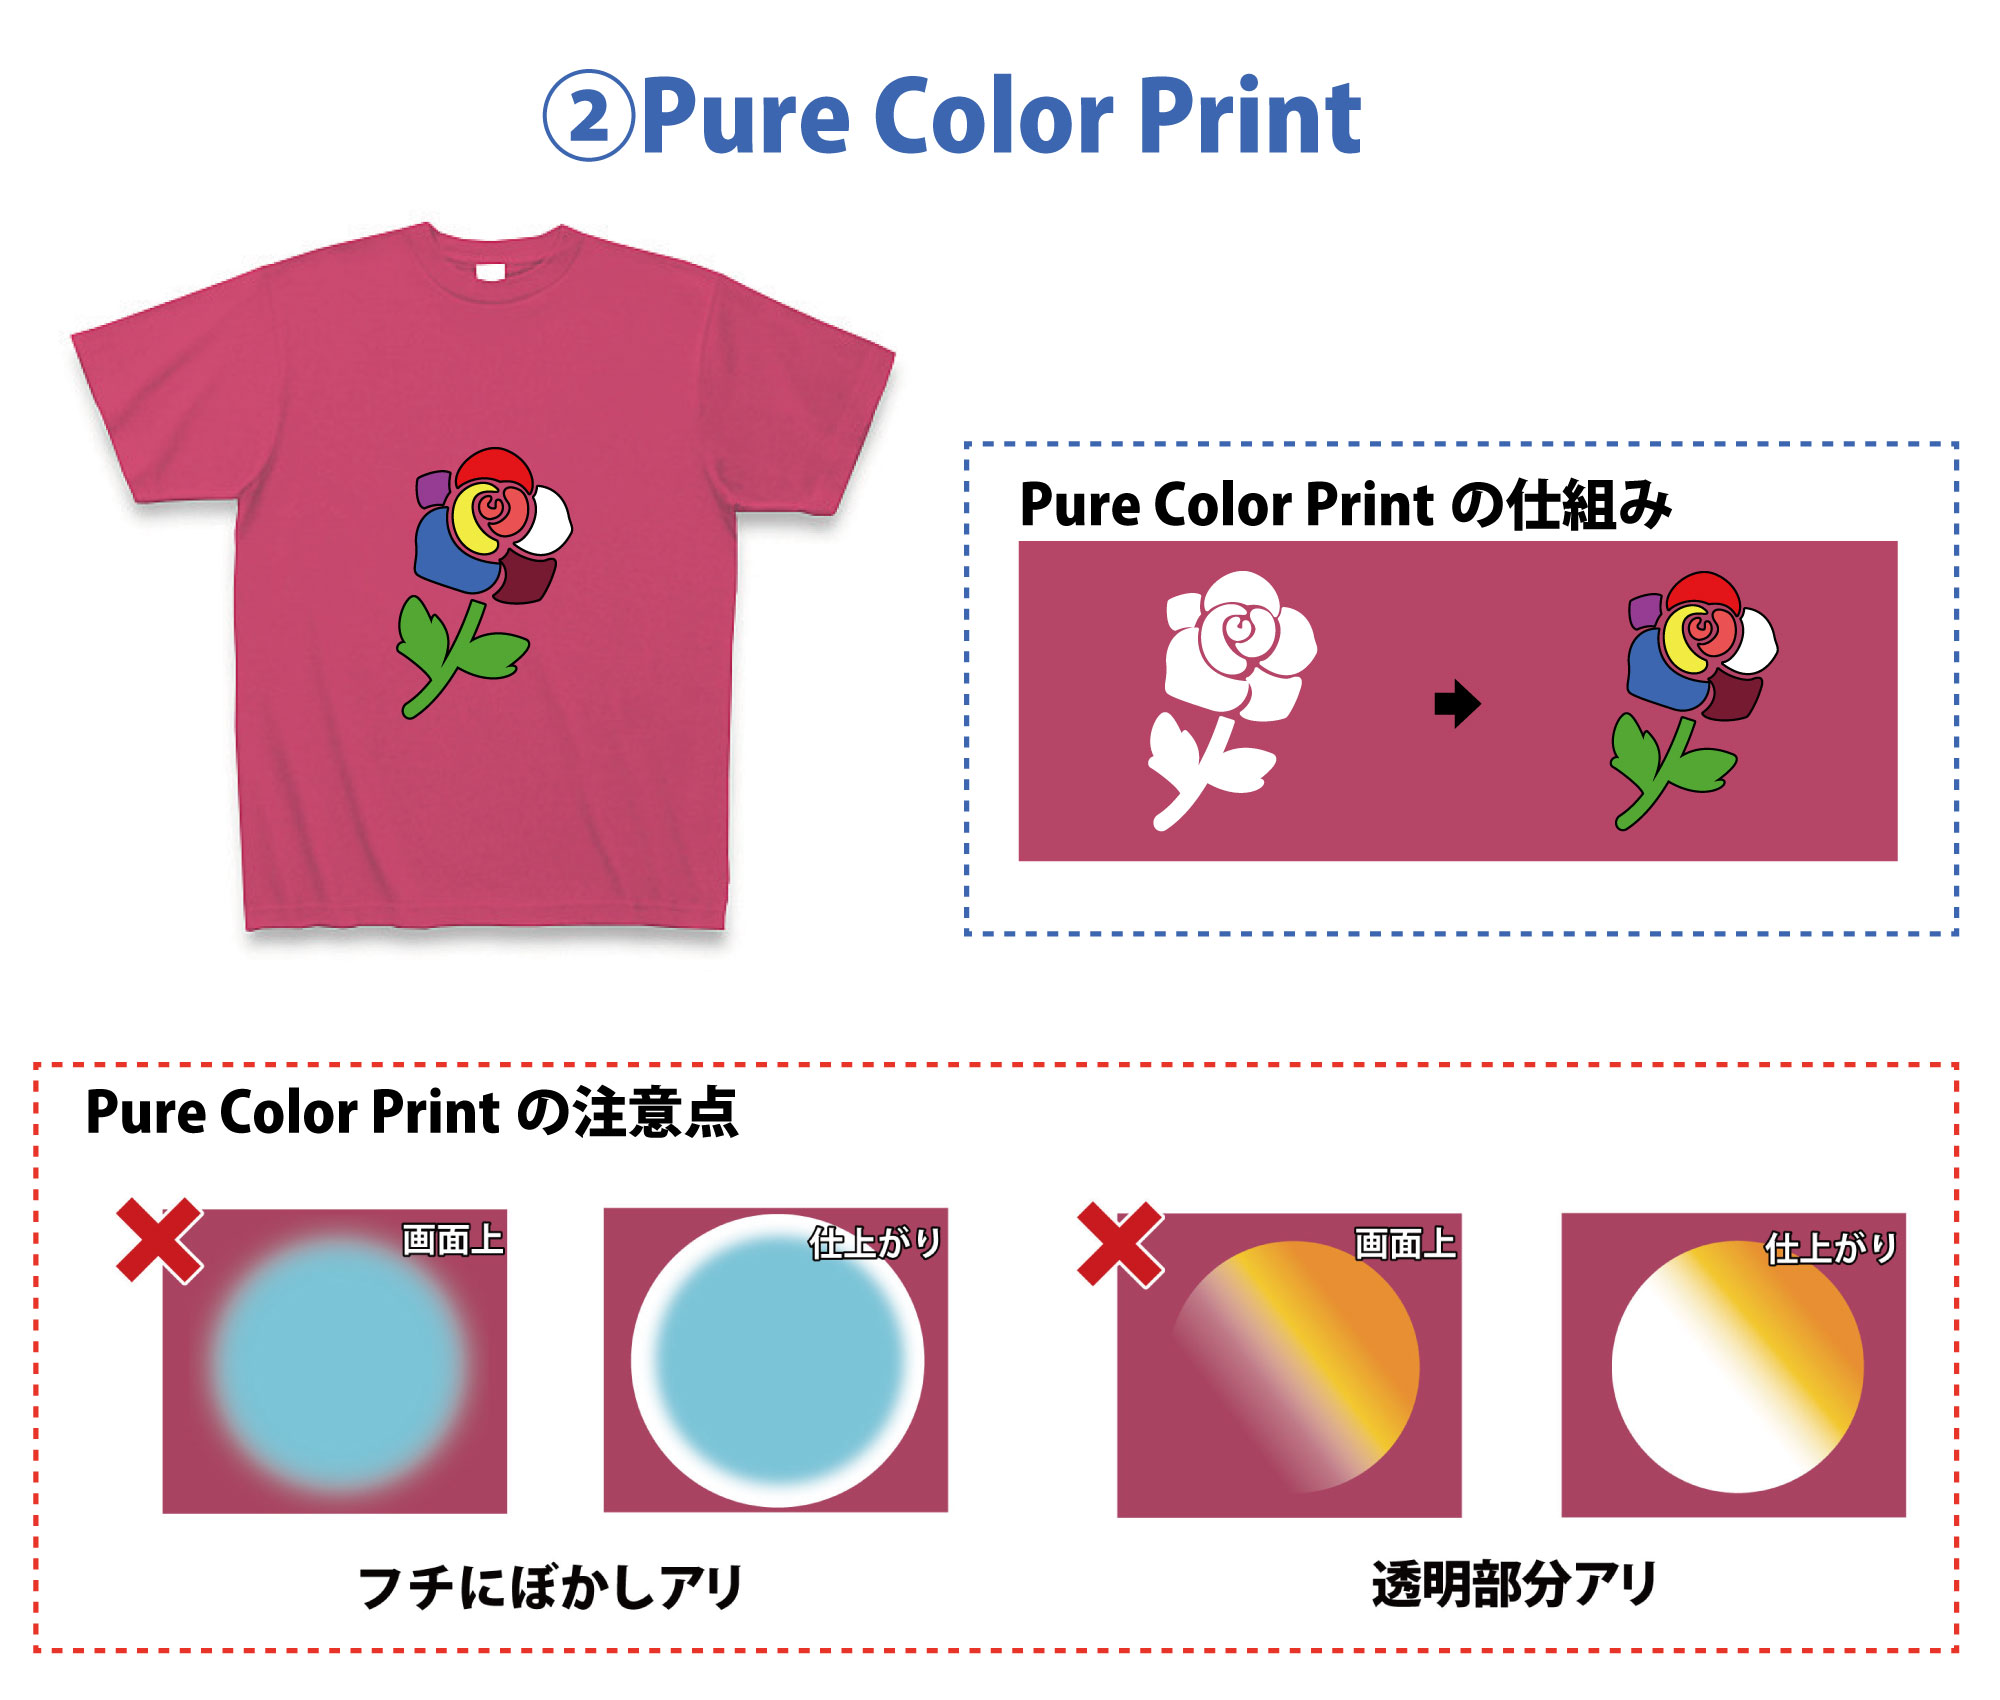 Pure Color Print説明